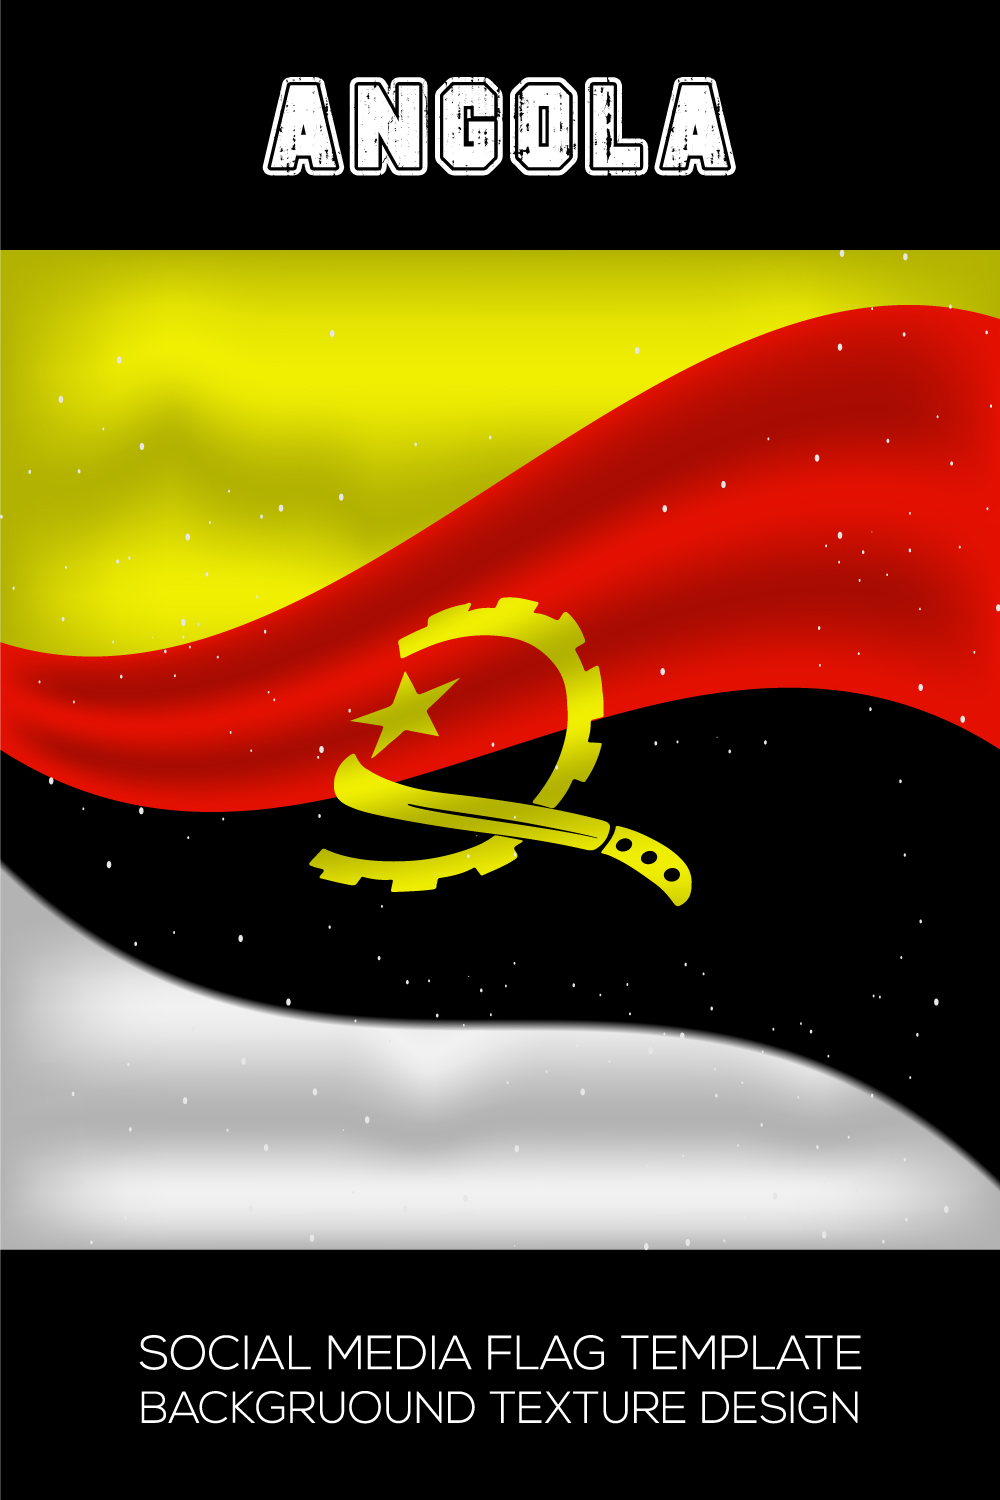 Amazing image of the flag of Angola.